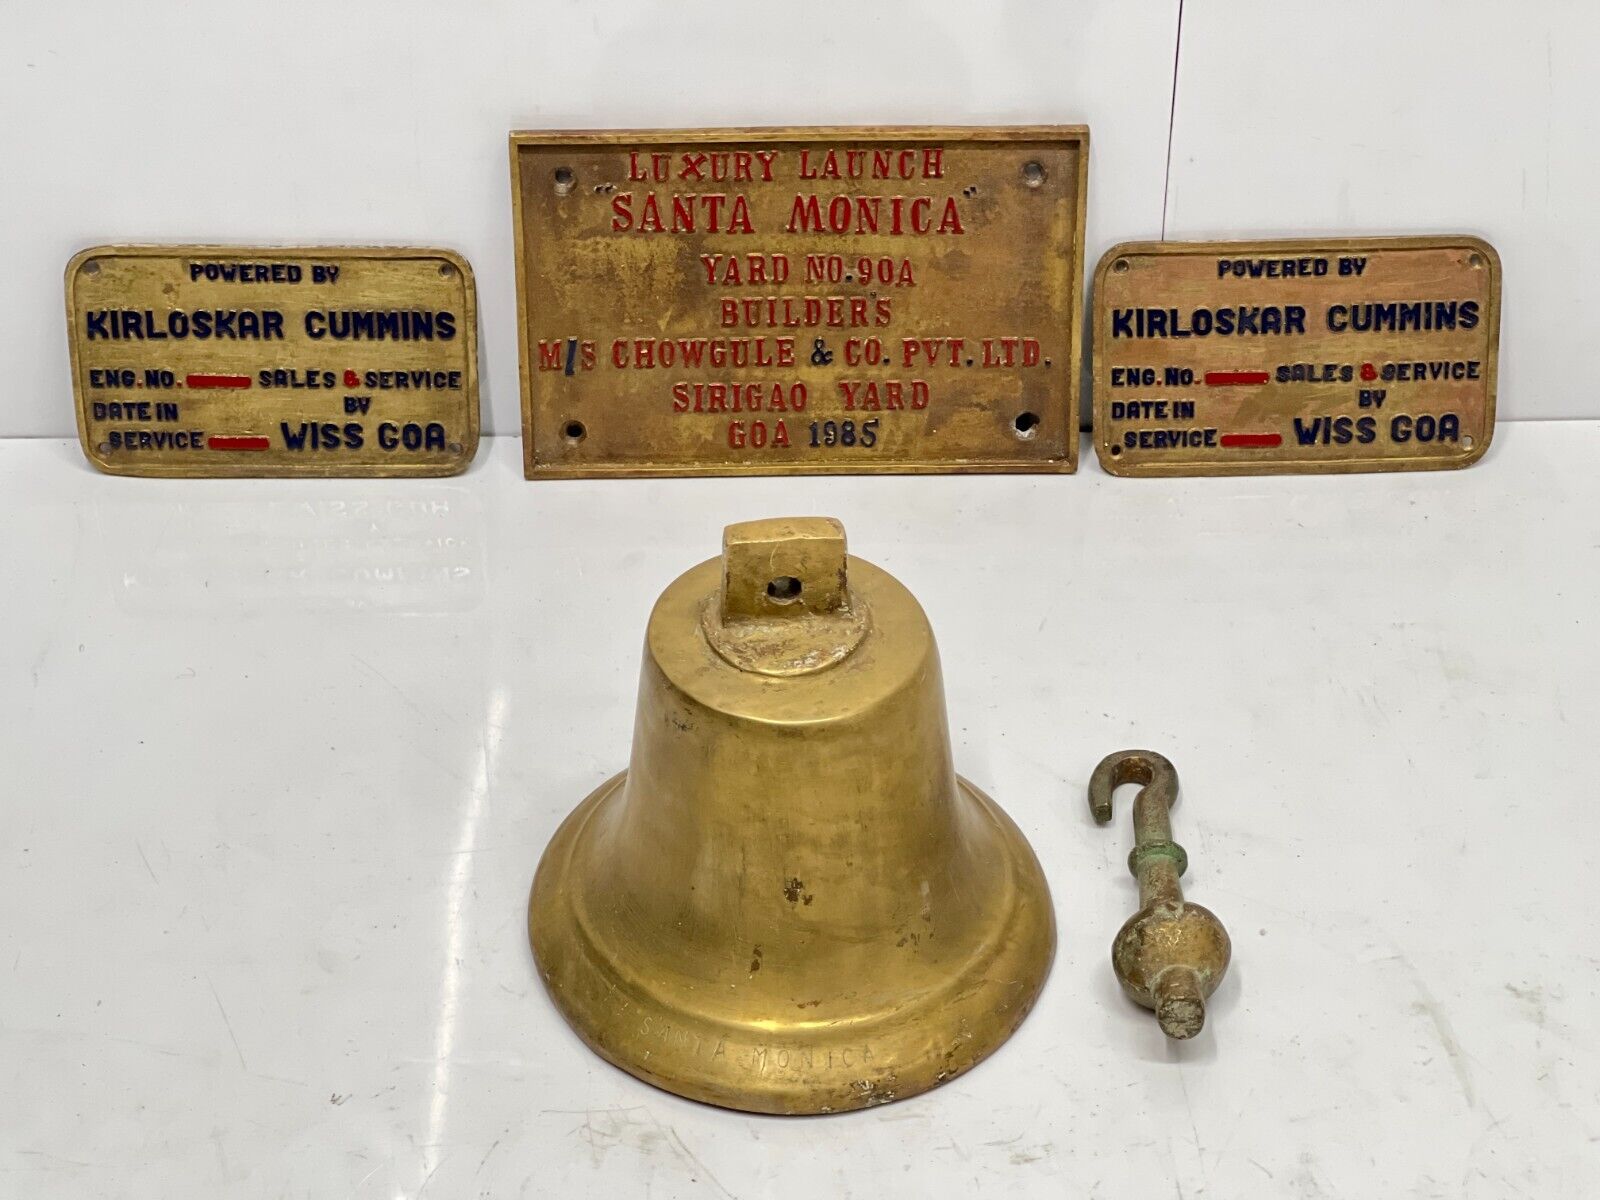 Original Brass Bell with Santa Monica & Kirloskar Cummins 3 Vintage Name Plates